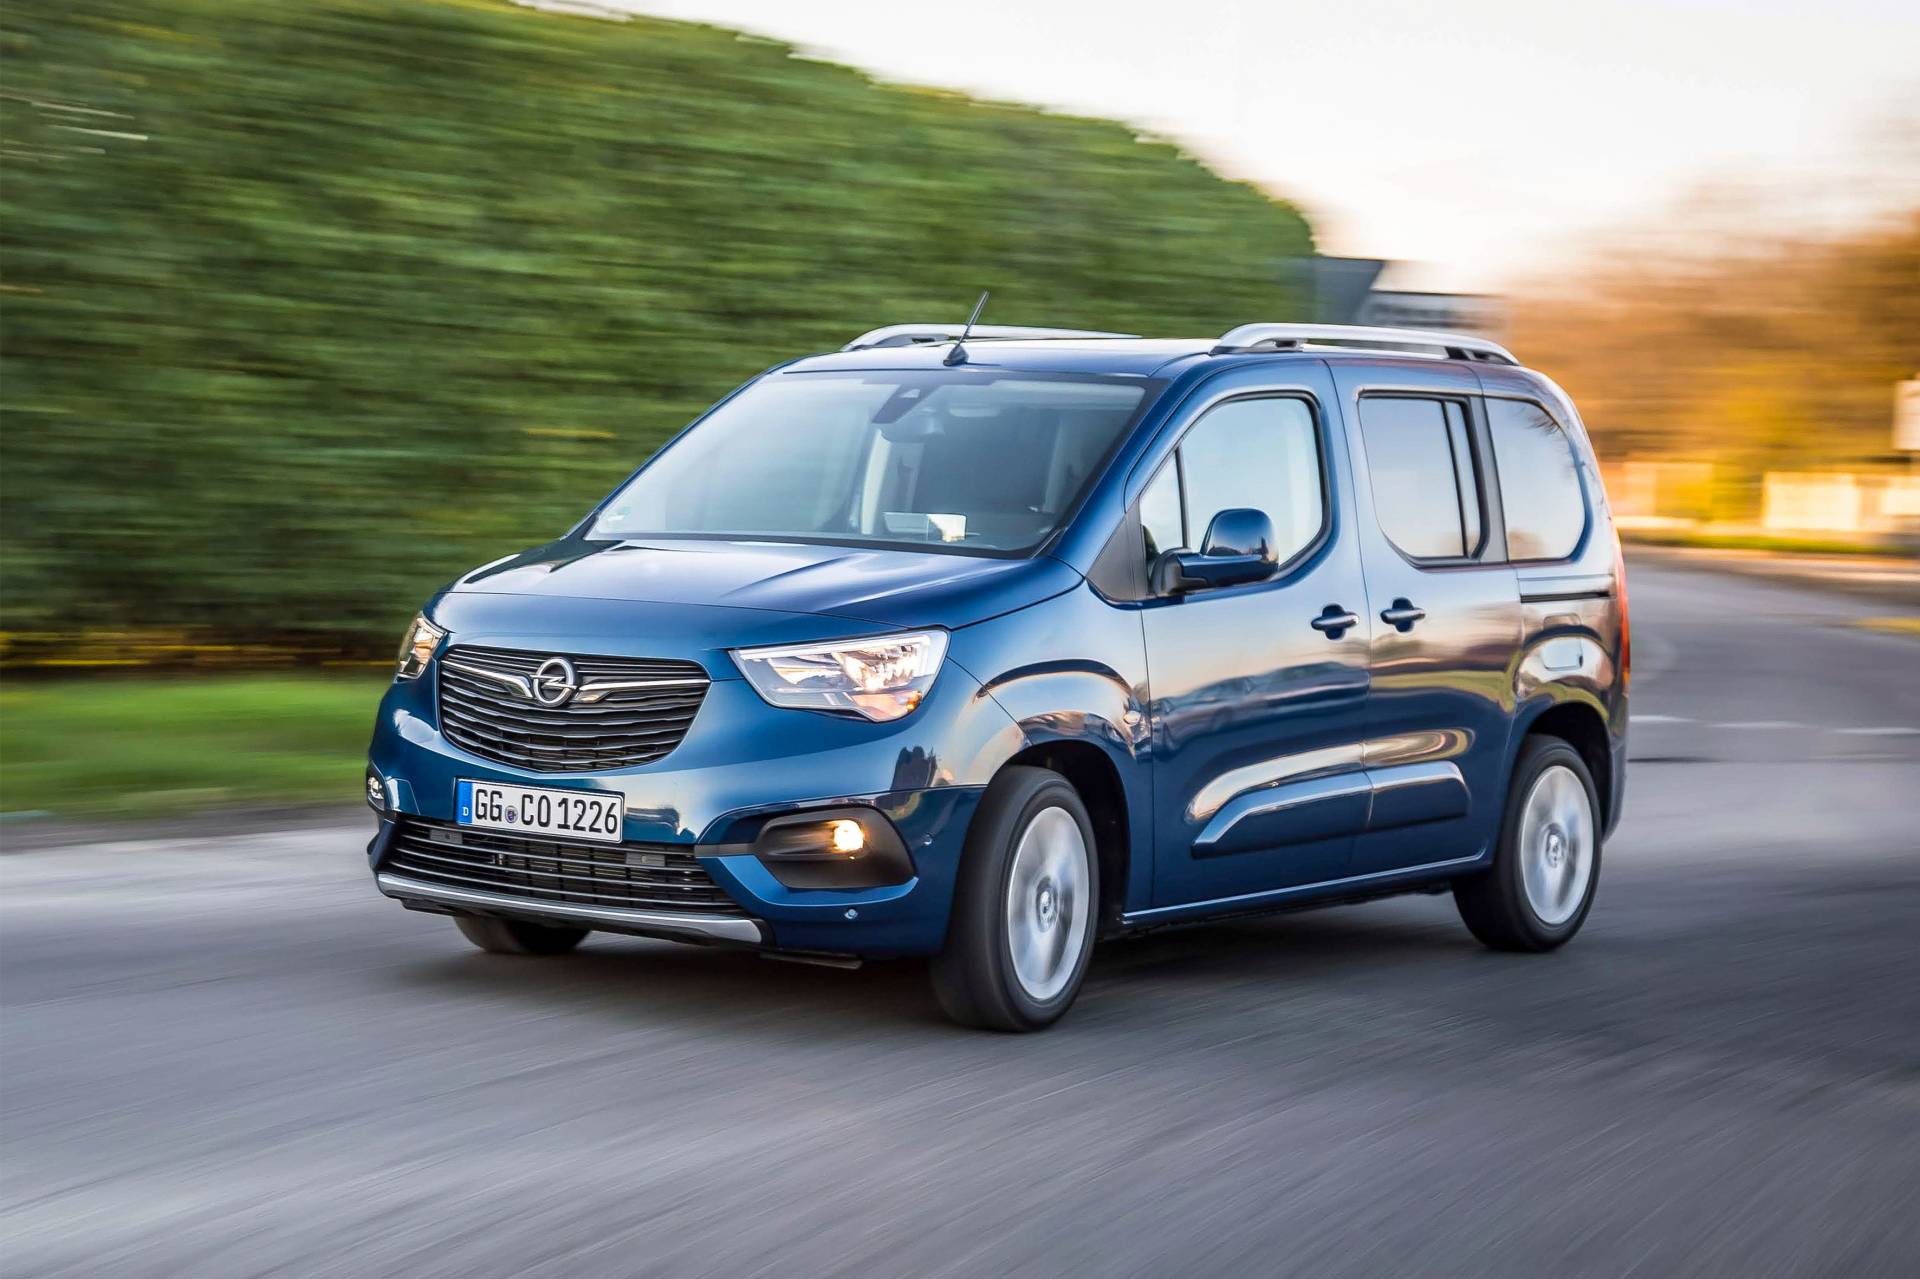 antiek ruilen controleren Opel Combo Life Gains 130 PS 1.2L Turbo Three-Pot, Eight-Speed Auto |  Carscoops